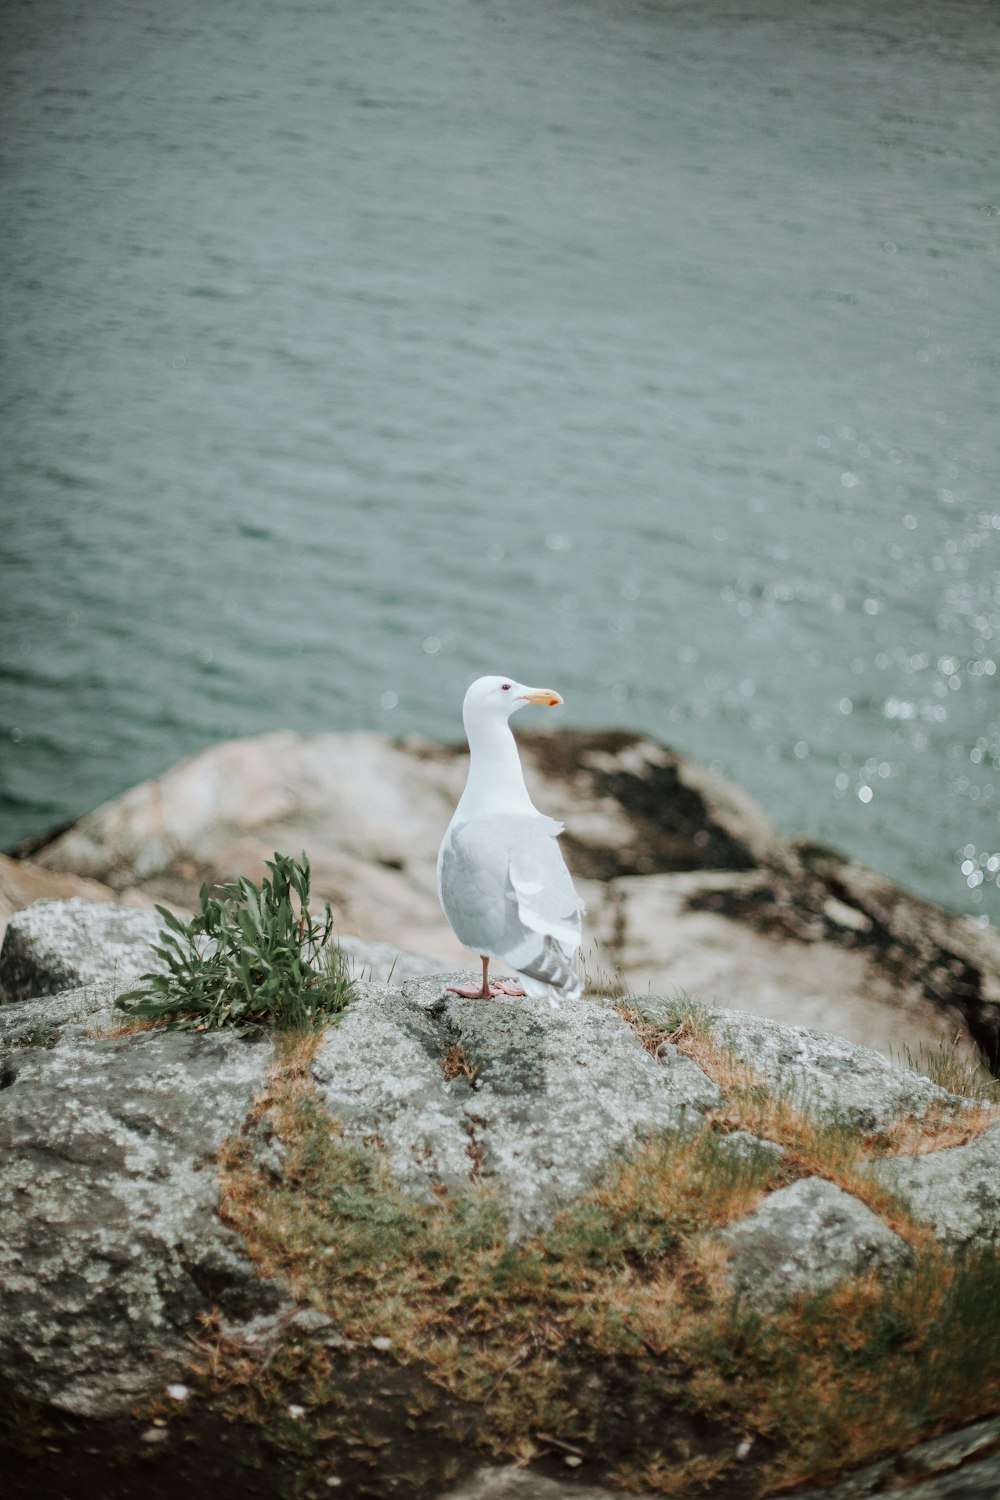 white bird on gray rock near body of water during daytime